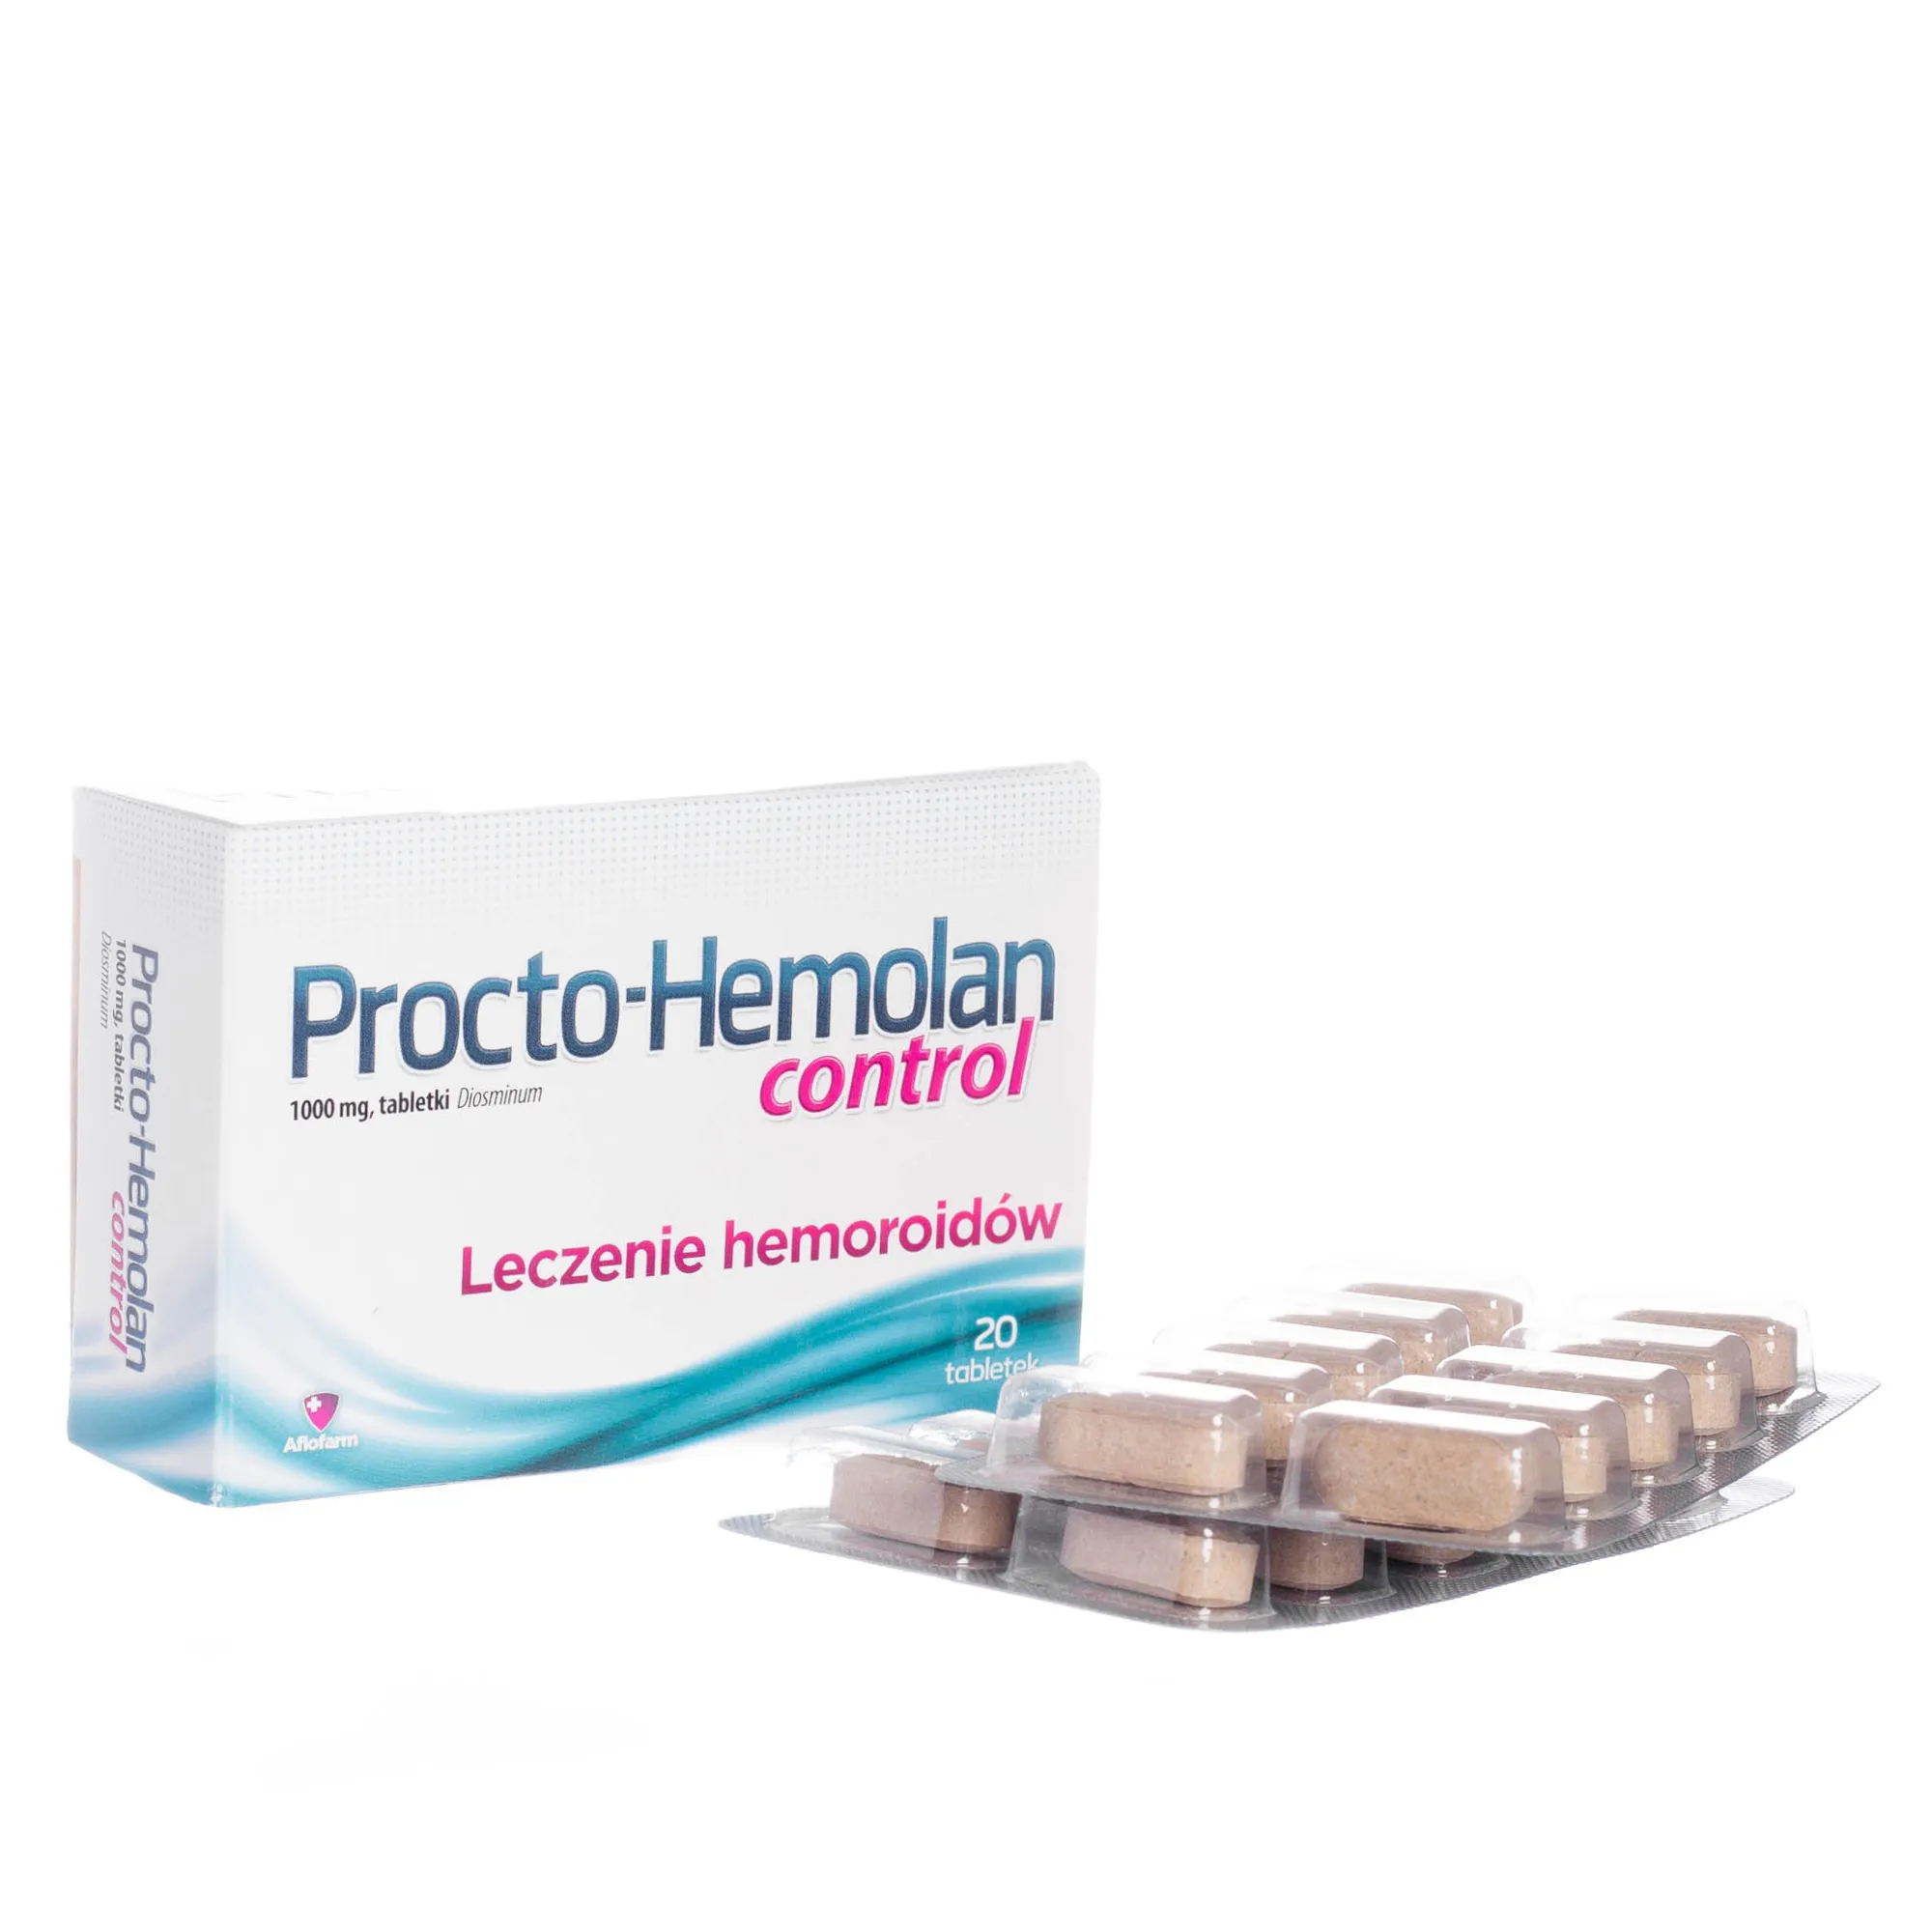 Procto-Hemolan control, 1000 mg, 20 tabletek